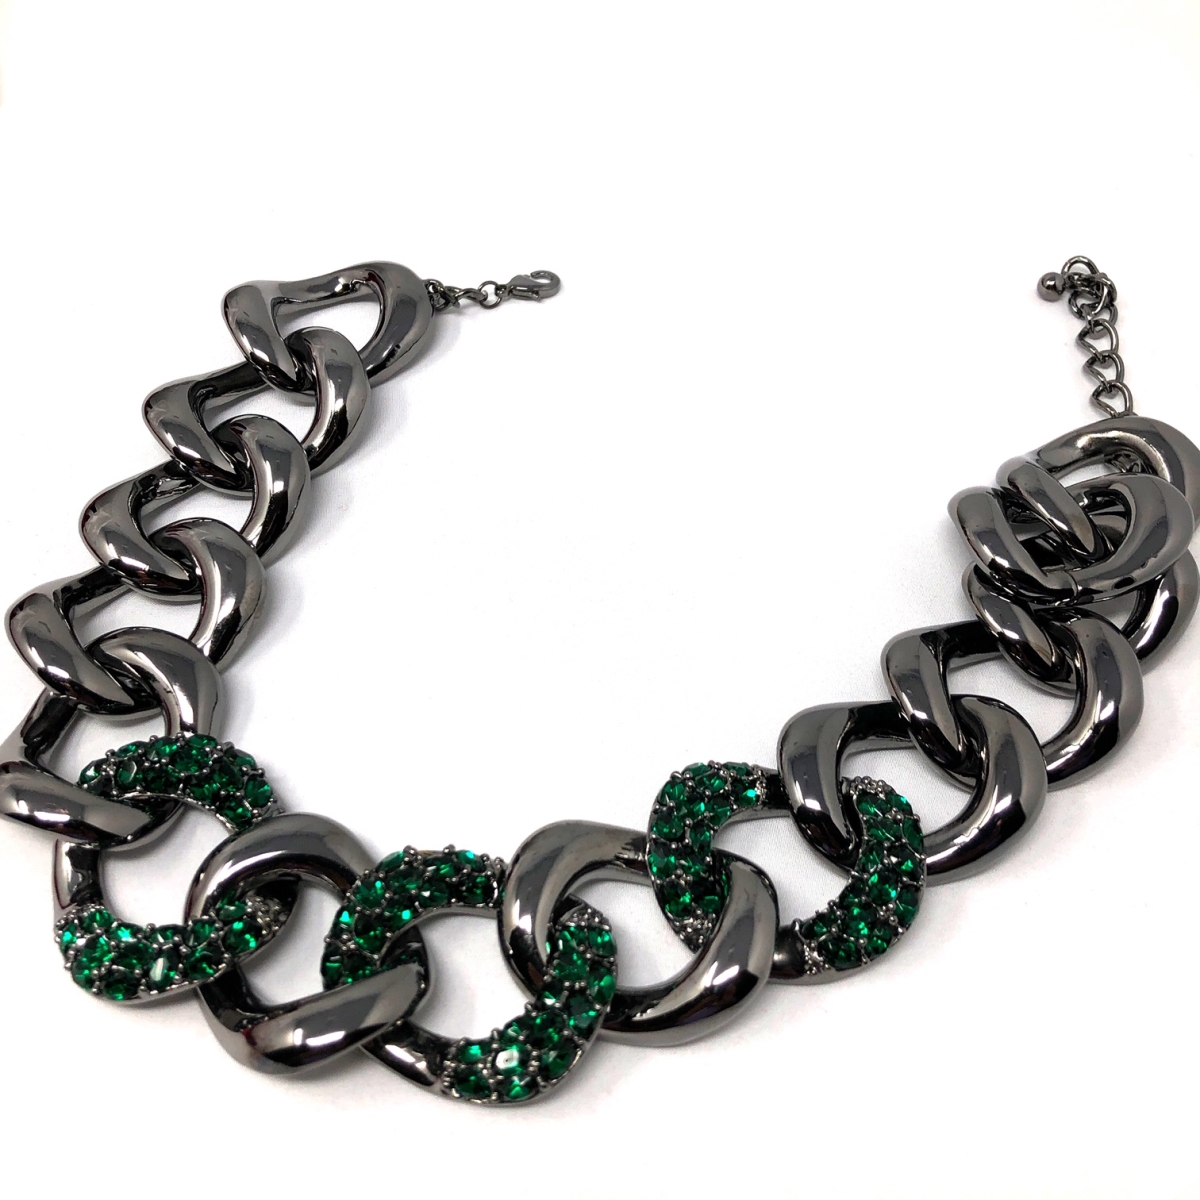 Q3591ok-green-hem Fashion Necklace - Green